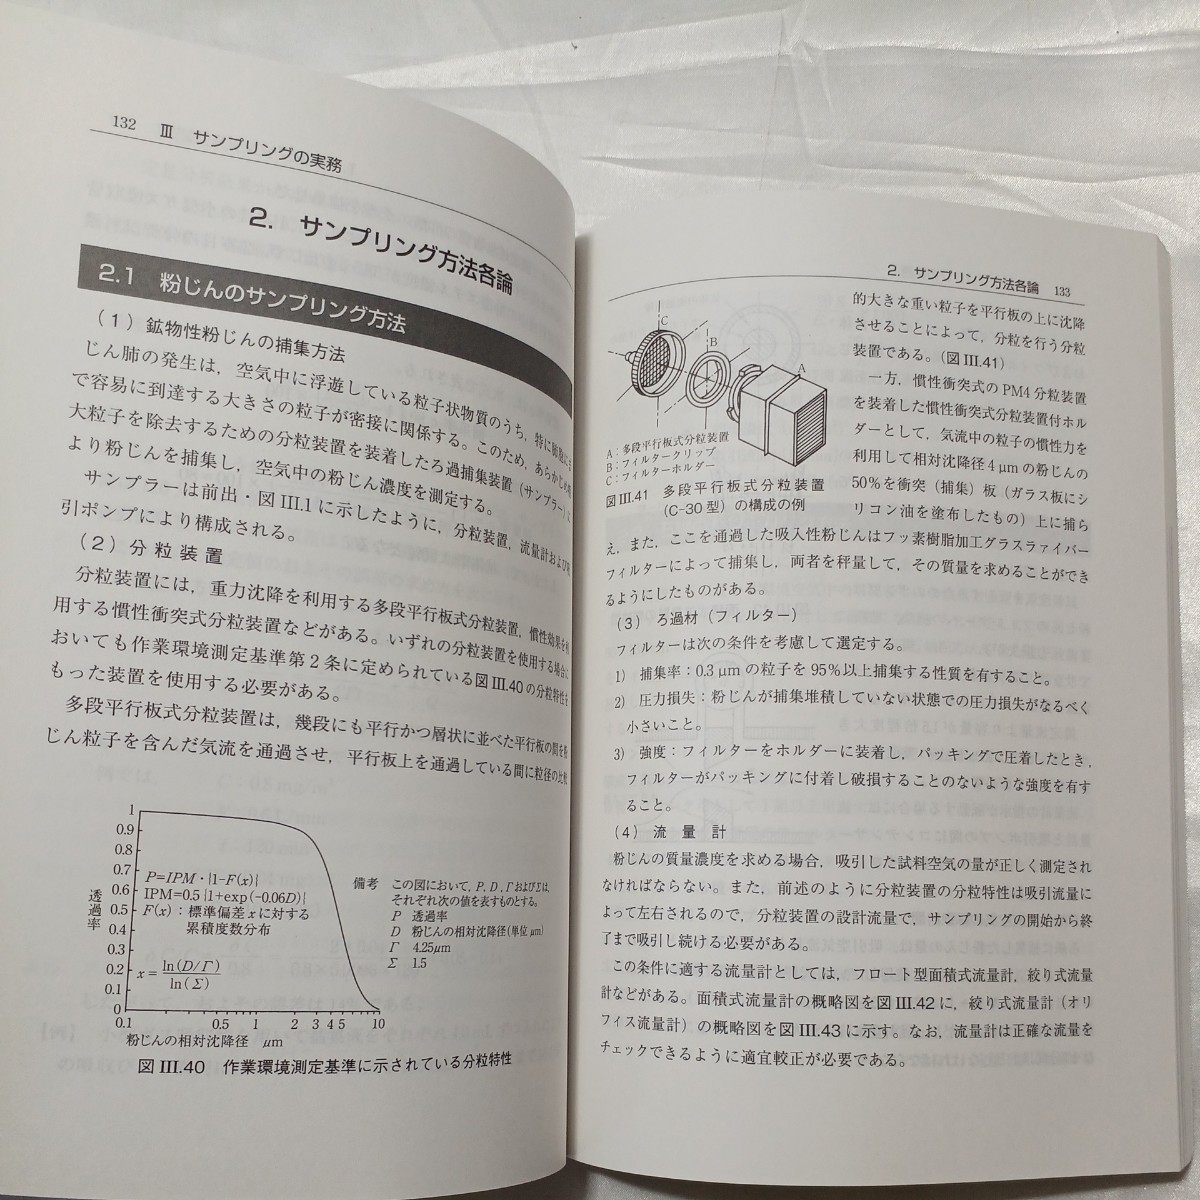 zaa-509♪作業環境測定ガイドブック 0 総論編 日本作業環境測定協会 (著) 日本作業環境測定協会; 改訂第3版（2017年6月30日）の画像7